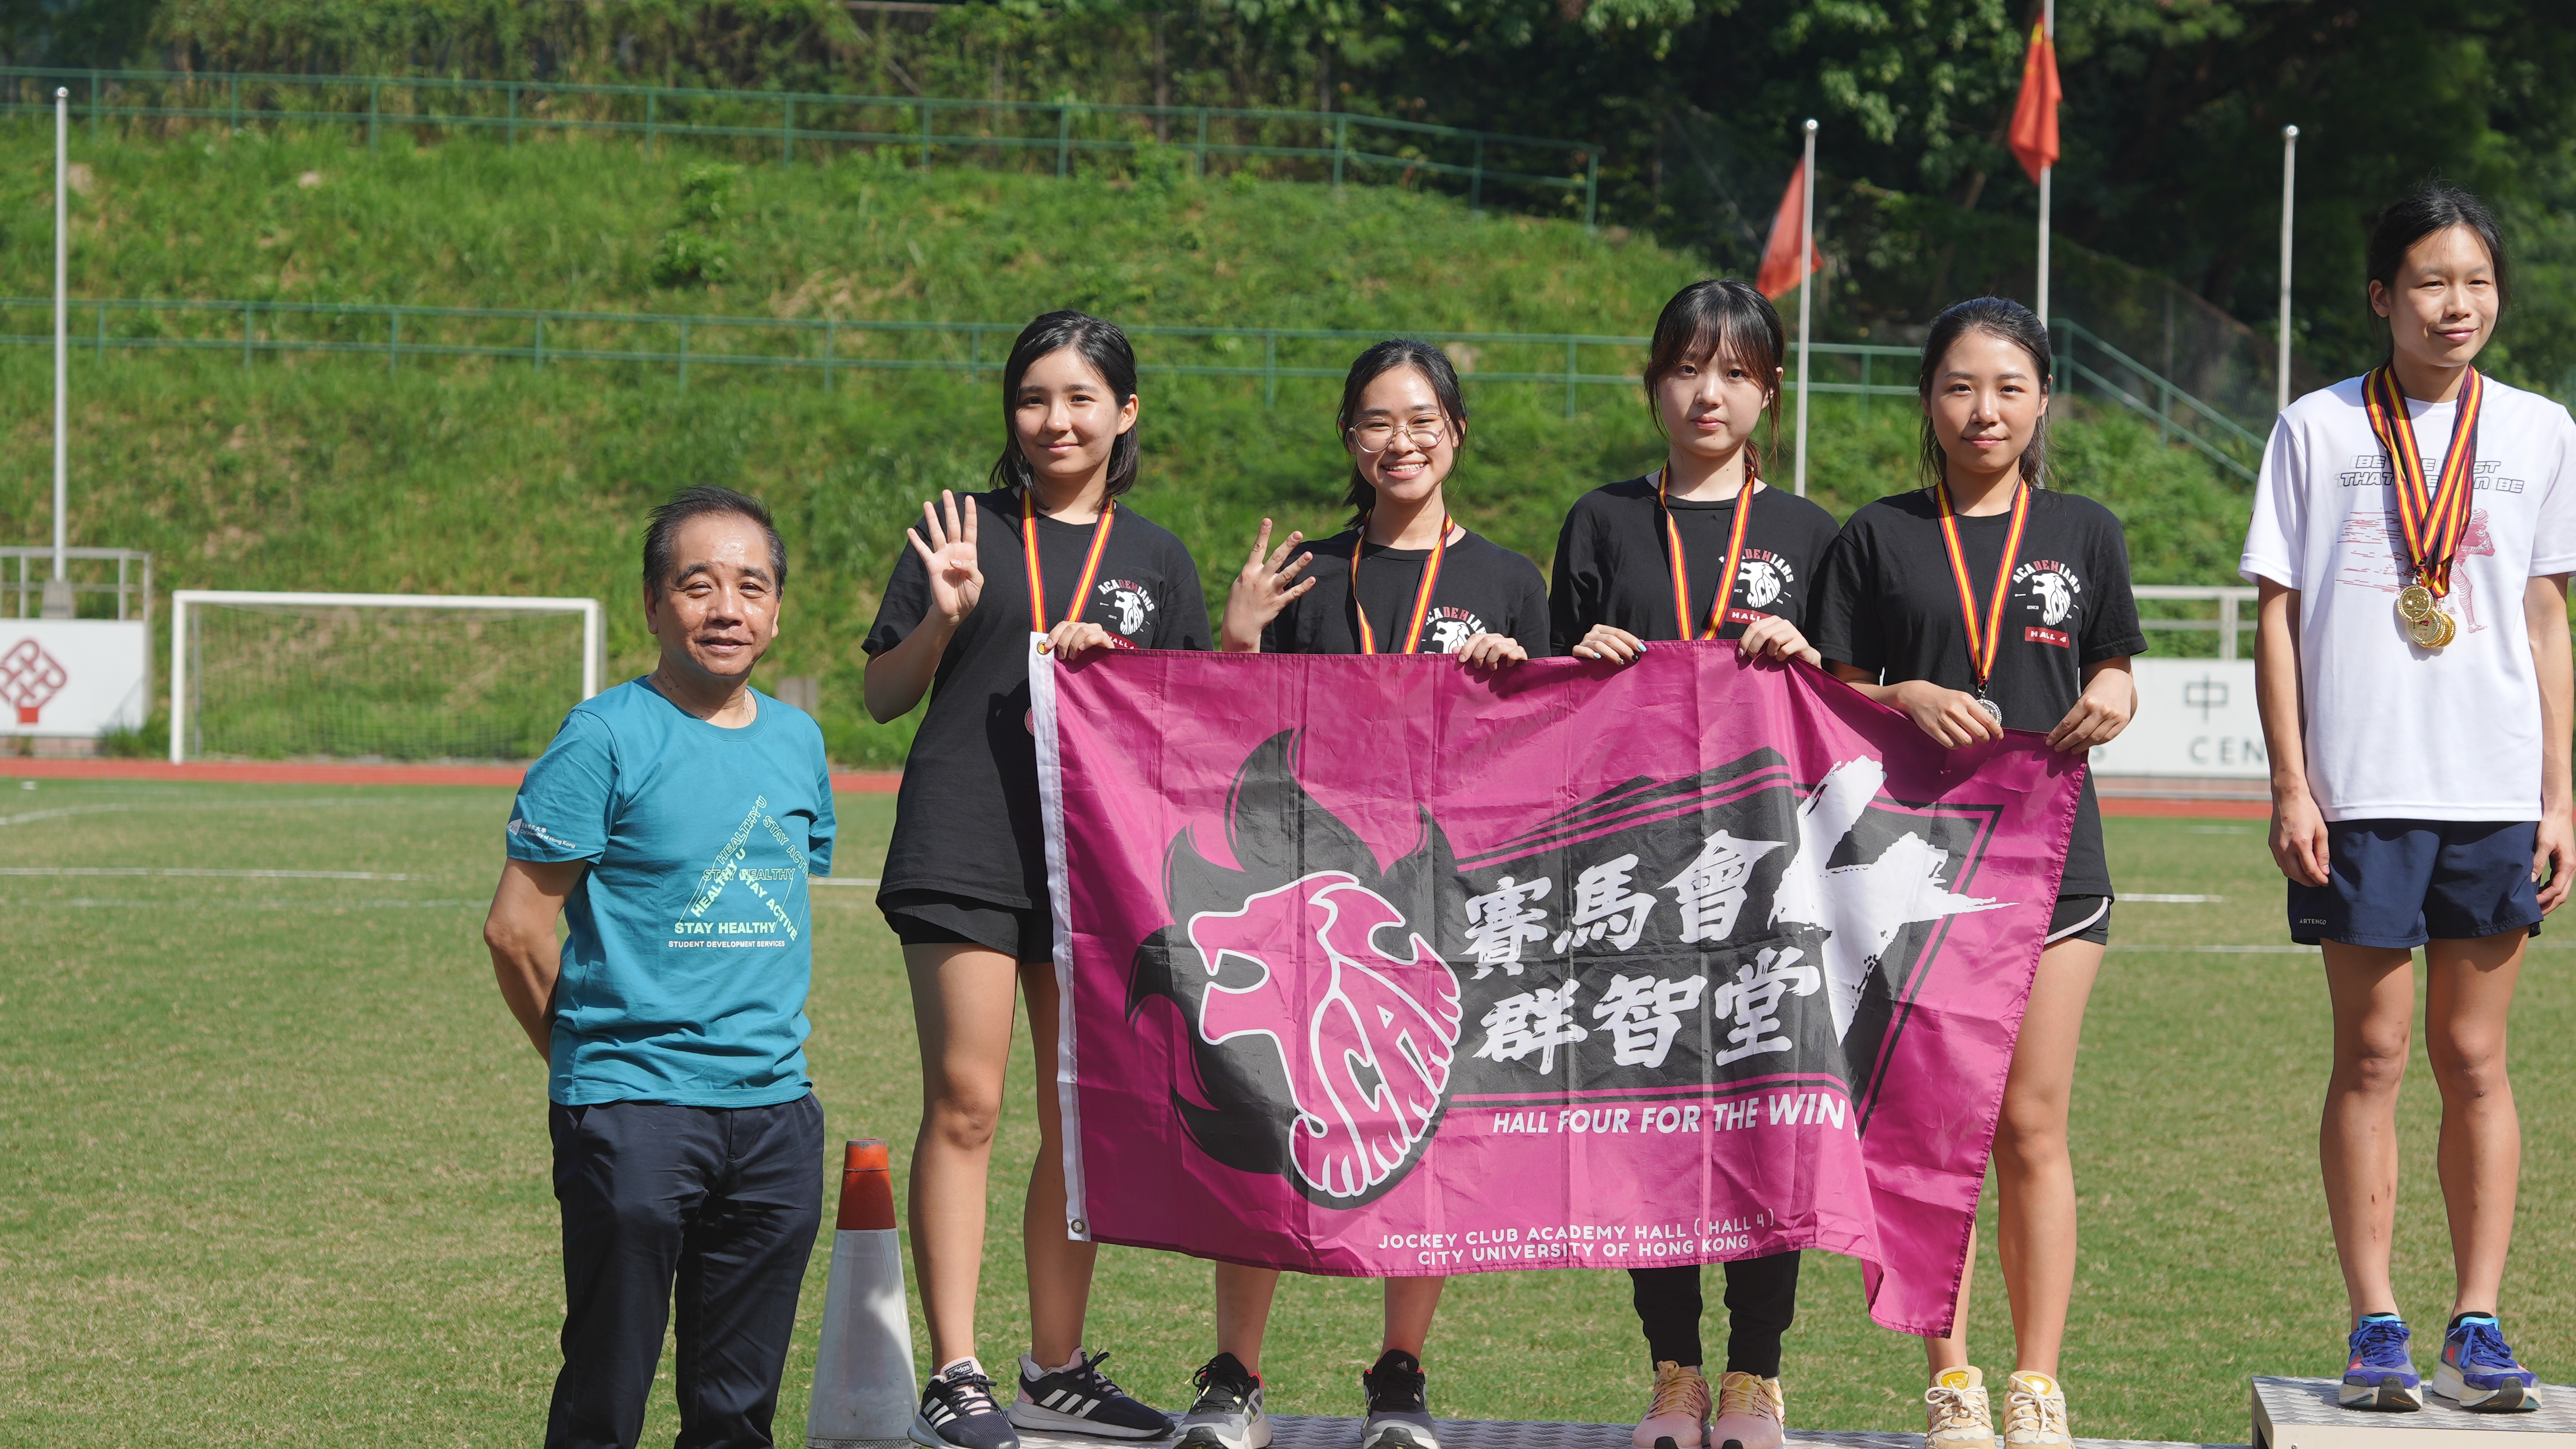 Hall 4 JCAC's female team